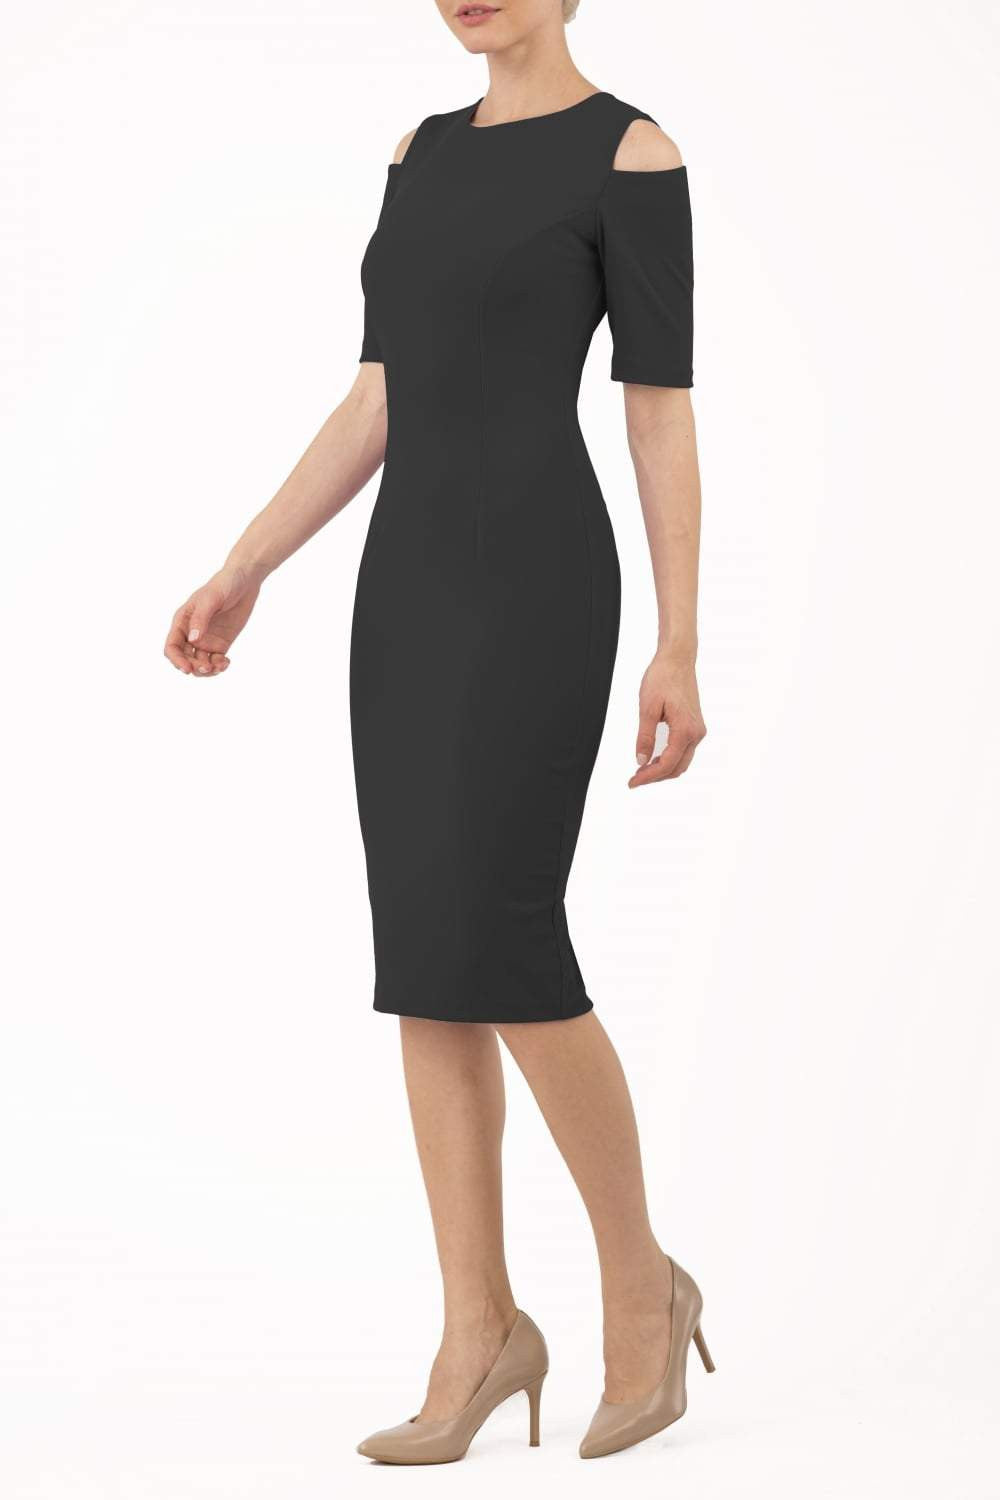 model is wearing diva catwalk solway pencil dress cold shoulder detail and rounded neckline in black front